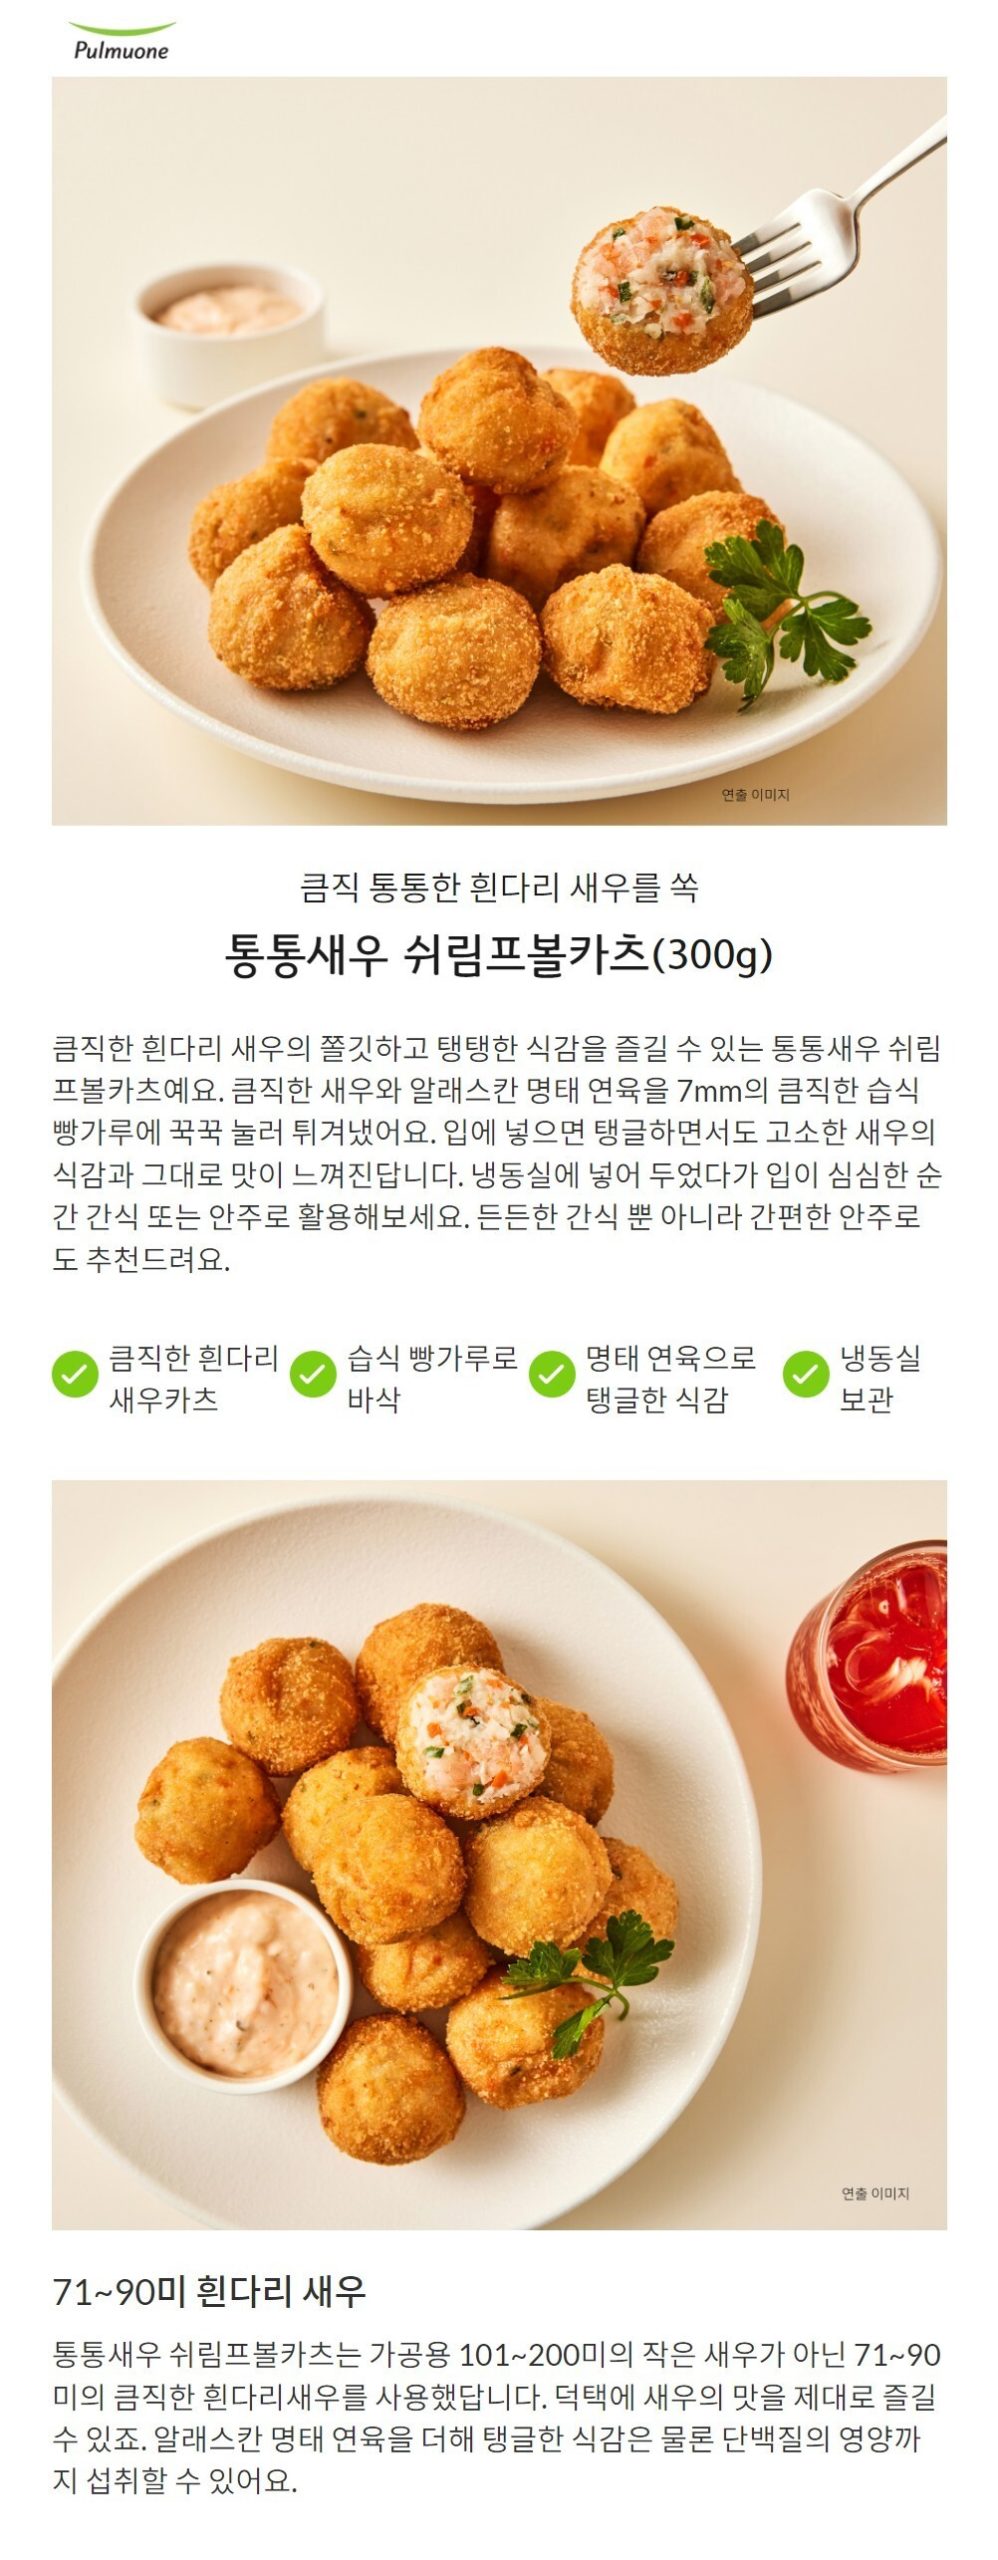 韓國食品-[Pulmuone] 炸蝦球 300g